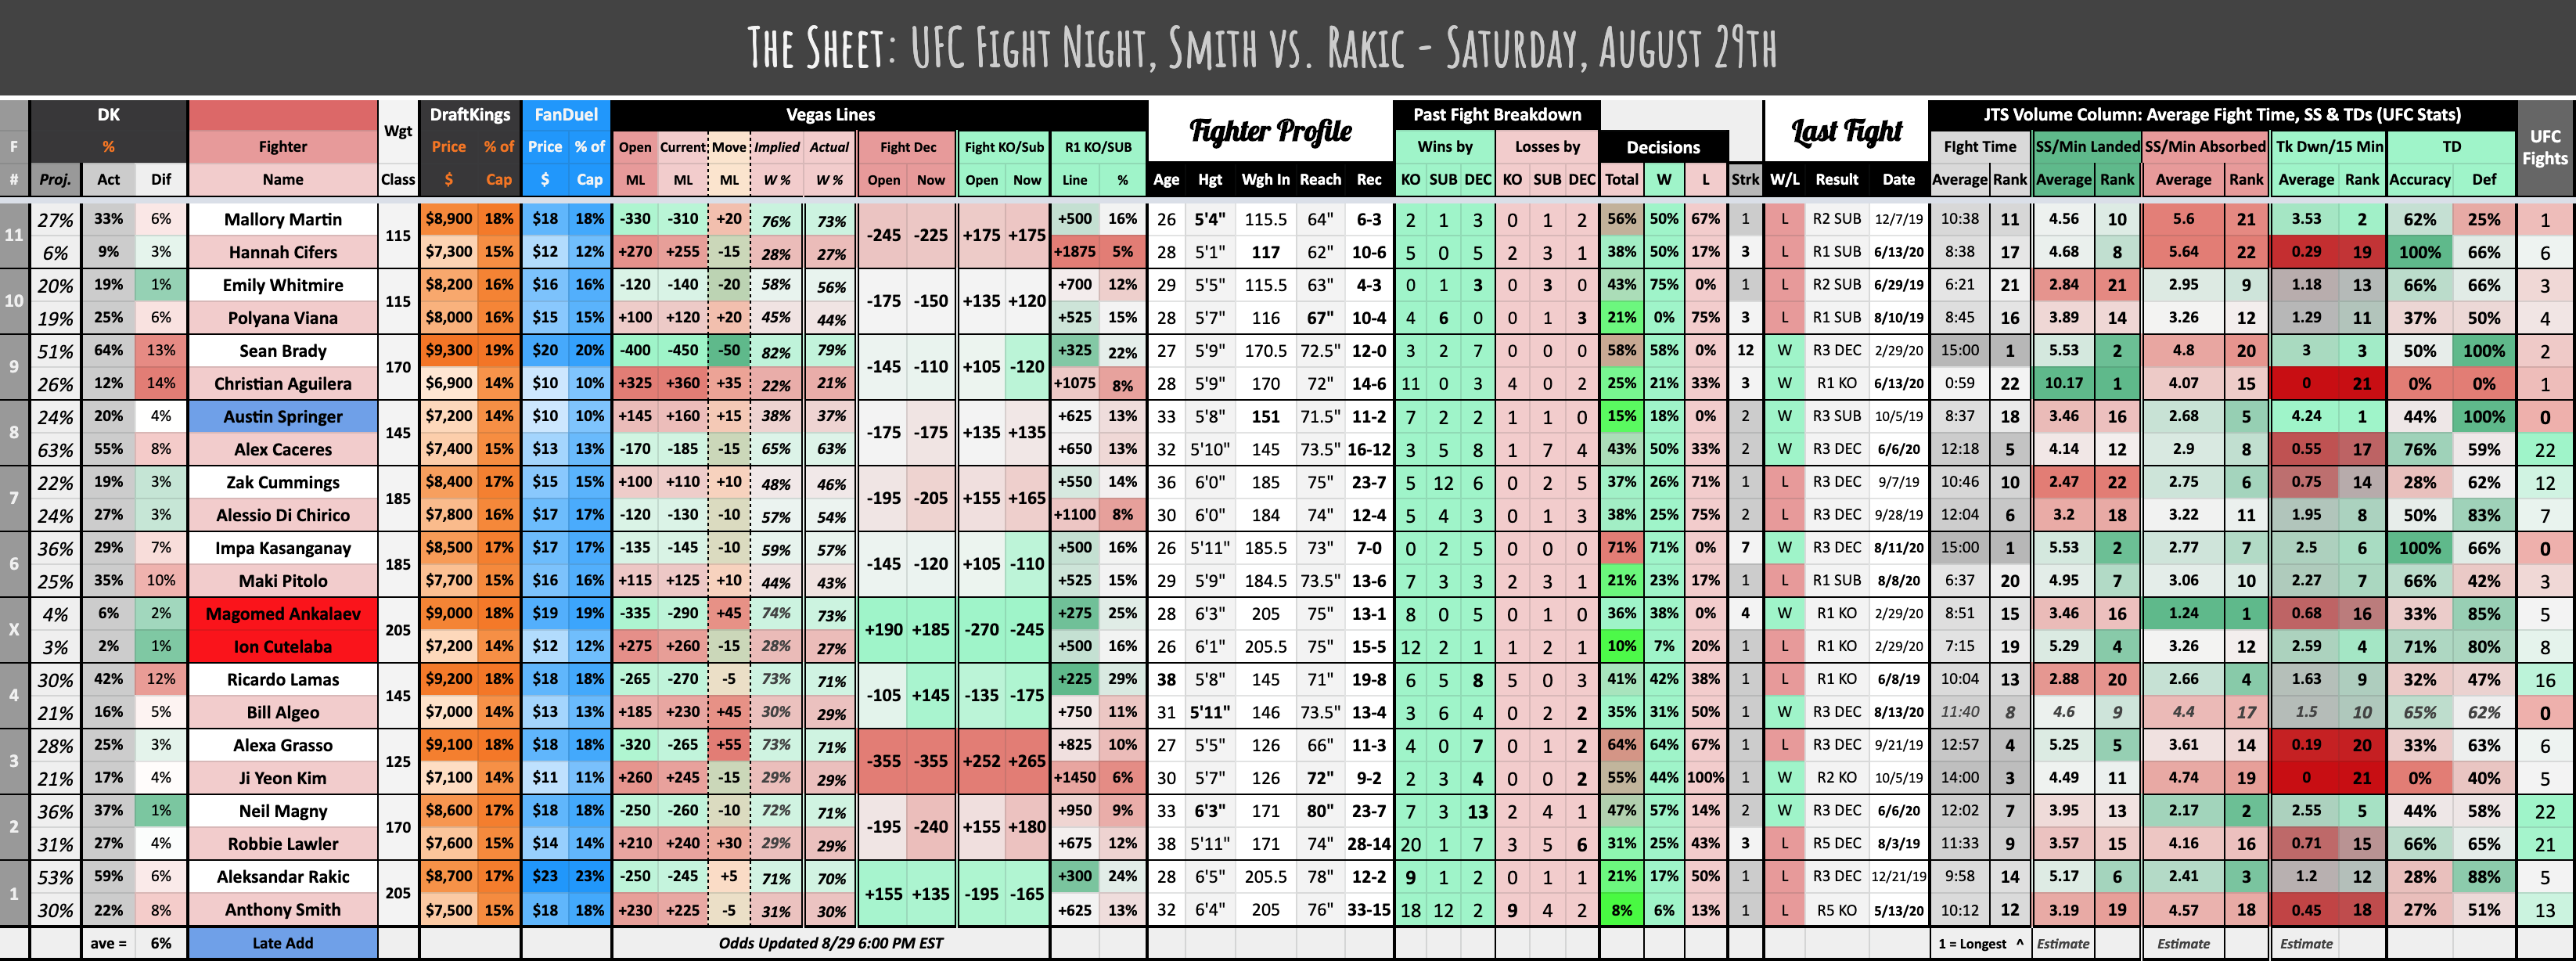 The Sheet: UFC Fight Night, Smith vs. Rakic - Saturday, August 29th